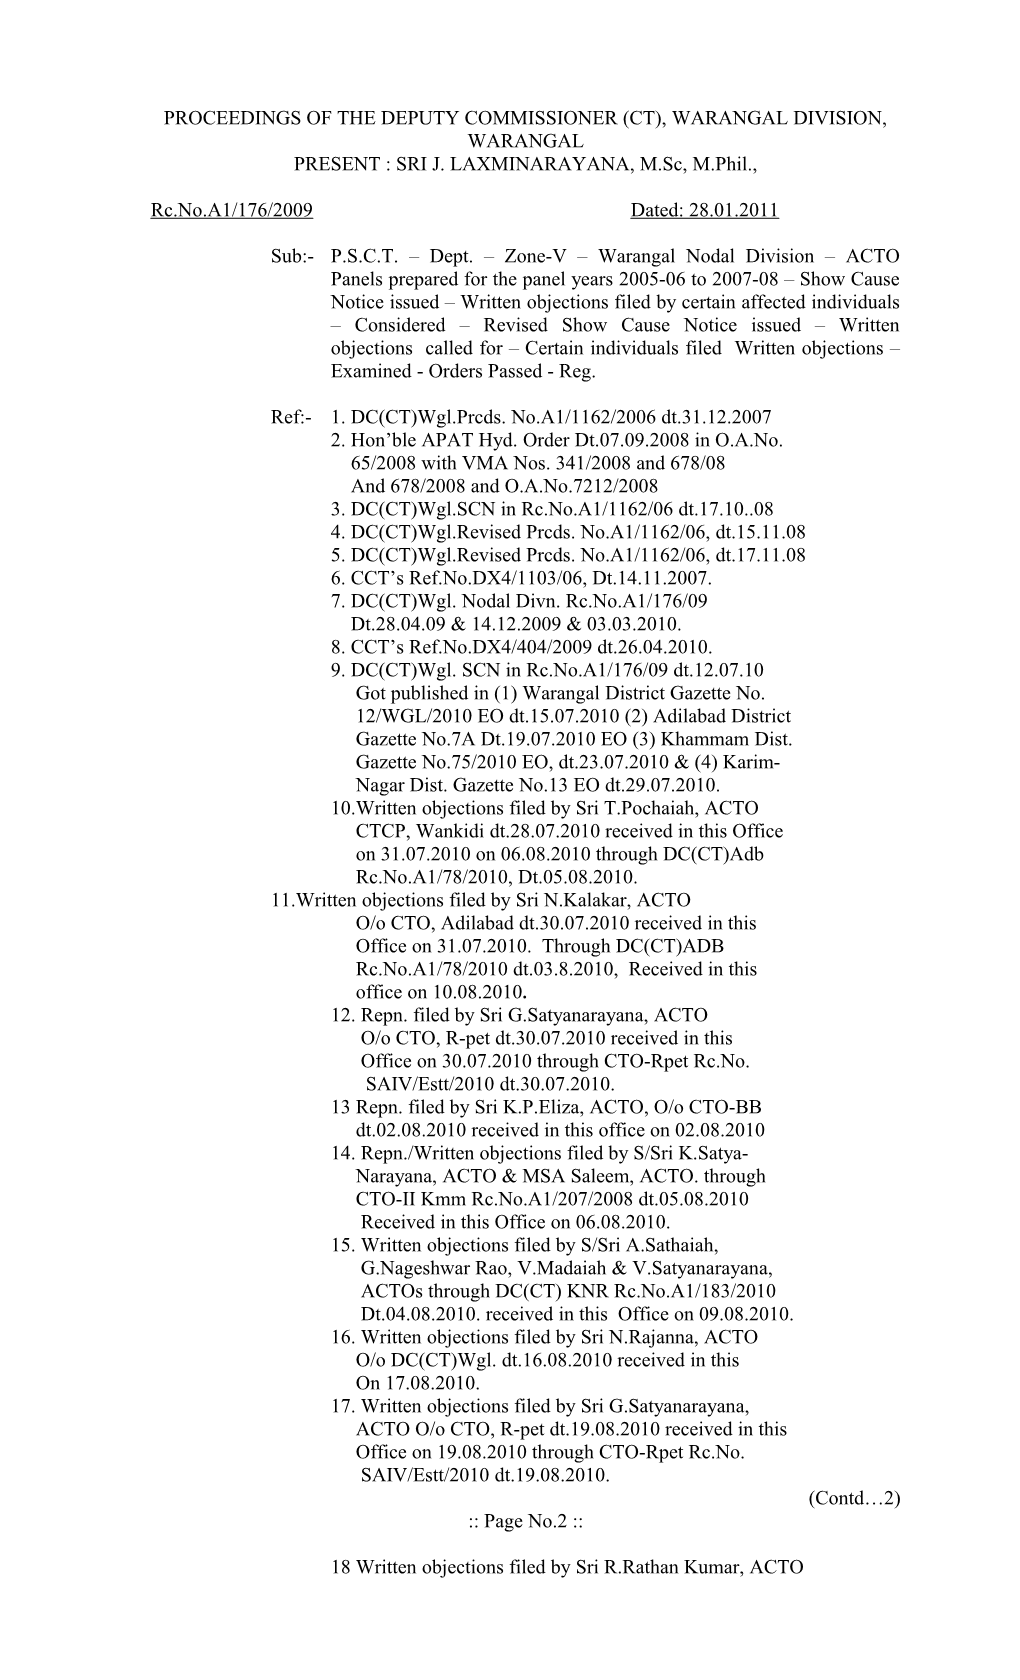 Proceedings of the Deputy Commissioner (Ct), Warangal Division, Warangal